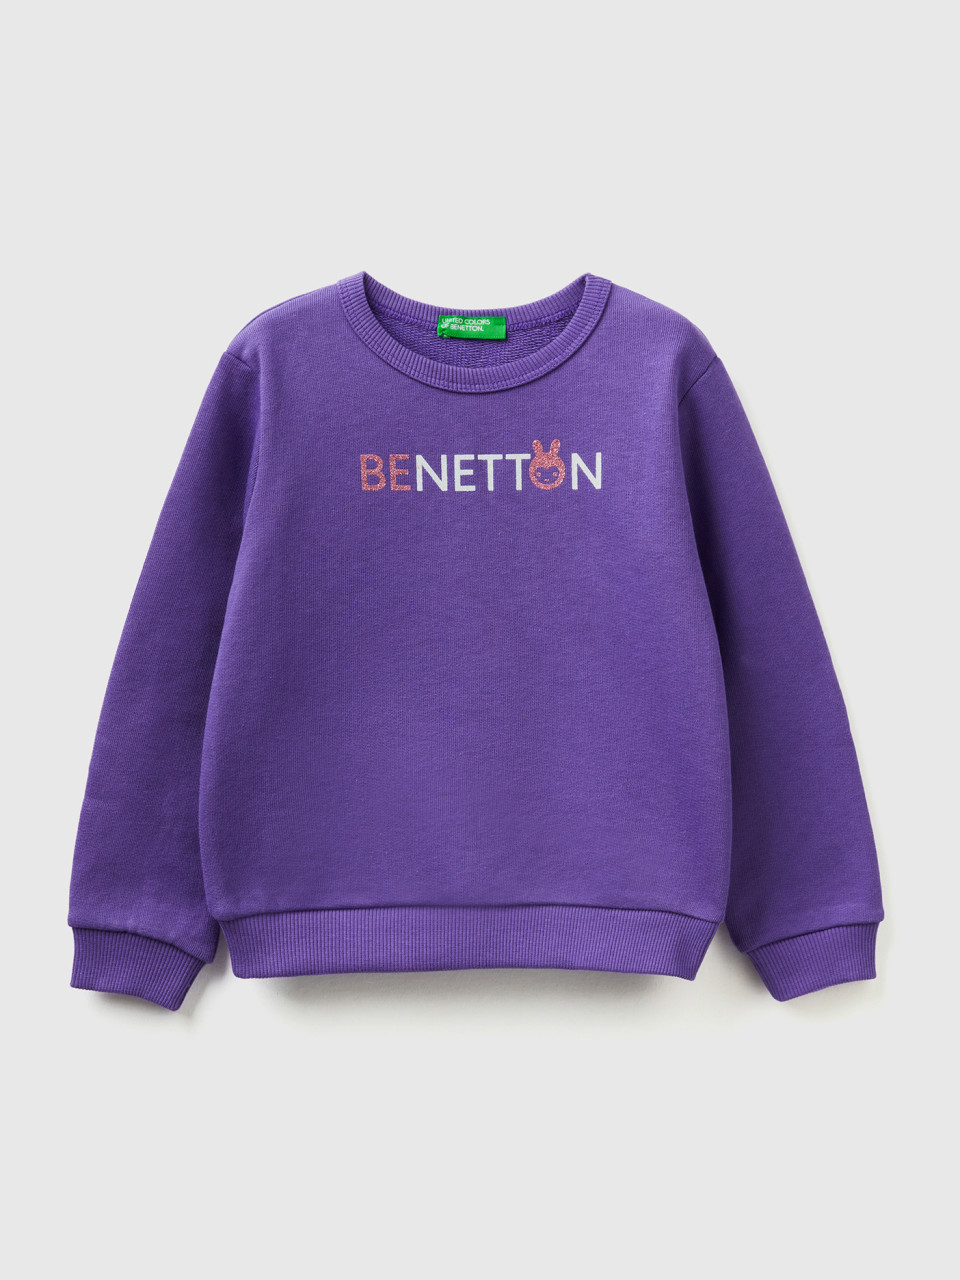 Benetton, Purple Sweatshirt In Organic Cotton With Glittery Print, Violet, Kids